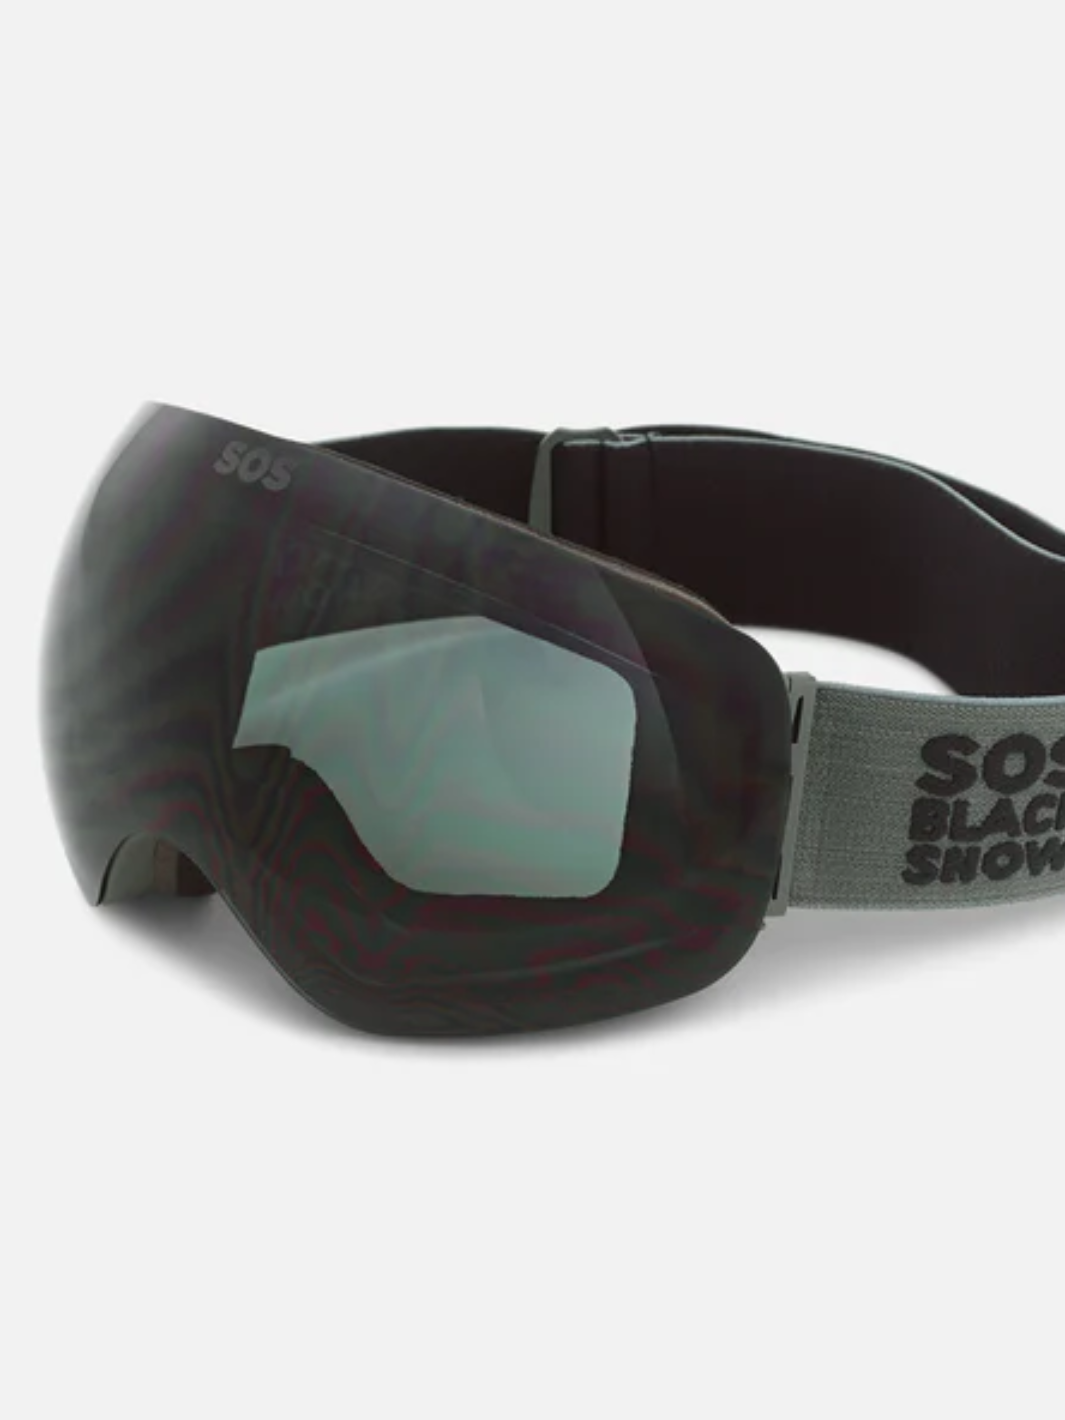 SOS Blacksnow Skibriller